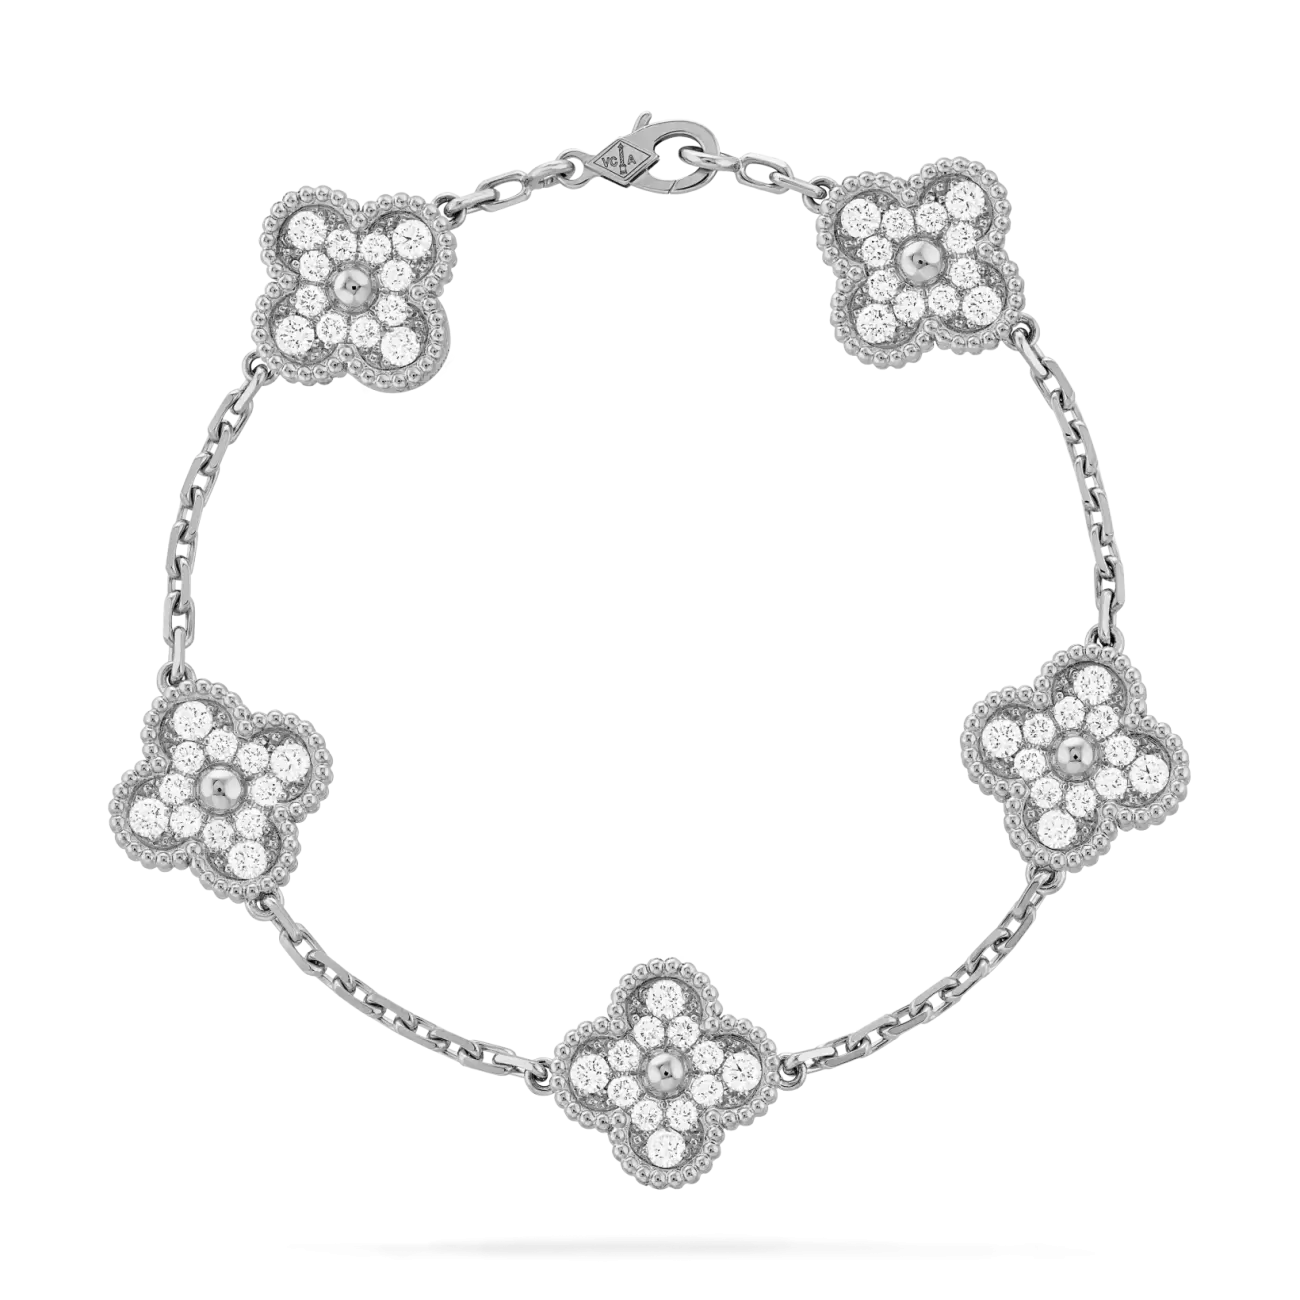 Vintage Alhambra bracelet, 5 motifs  white gold, diamonds